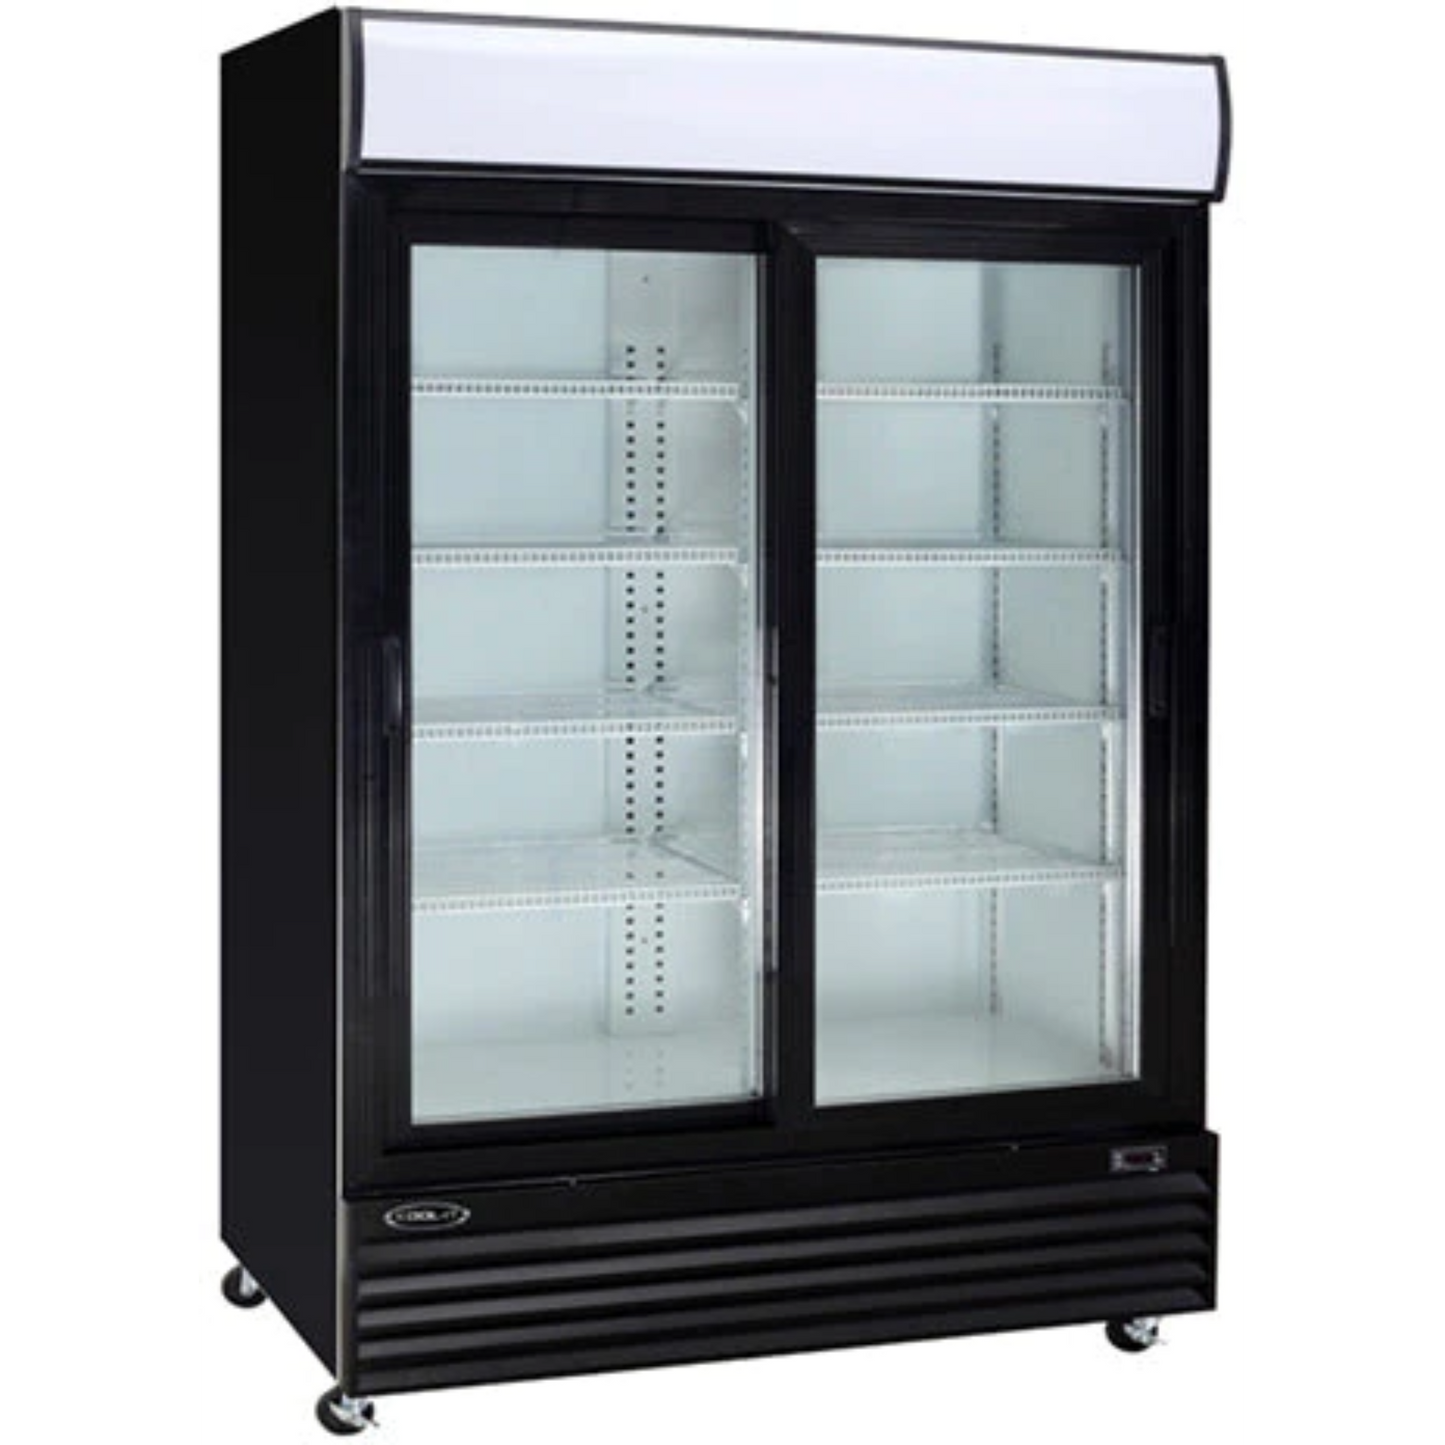 Kool-It KGM-50 52" Double Swing Glass Doors Merchandiser Refrigerator